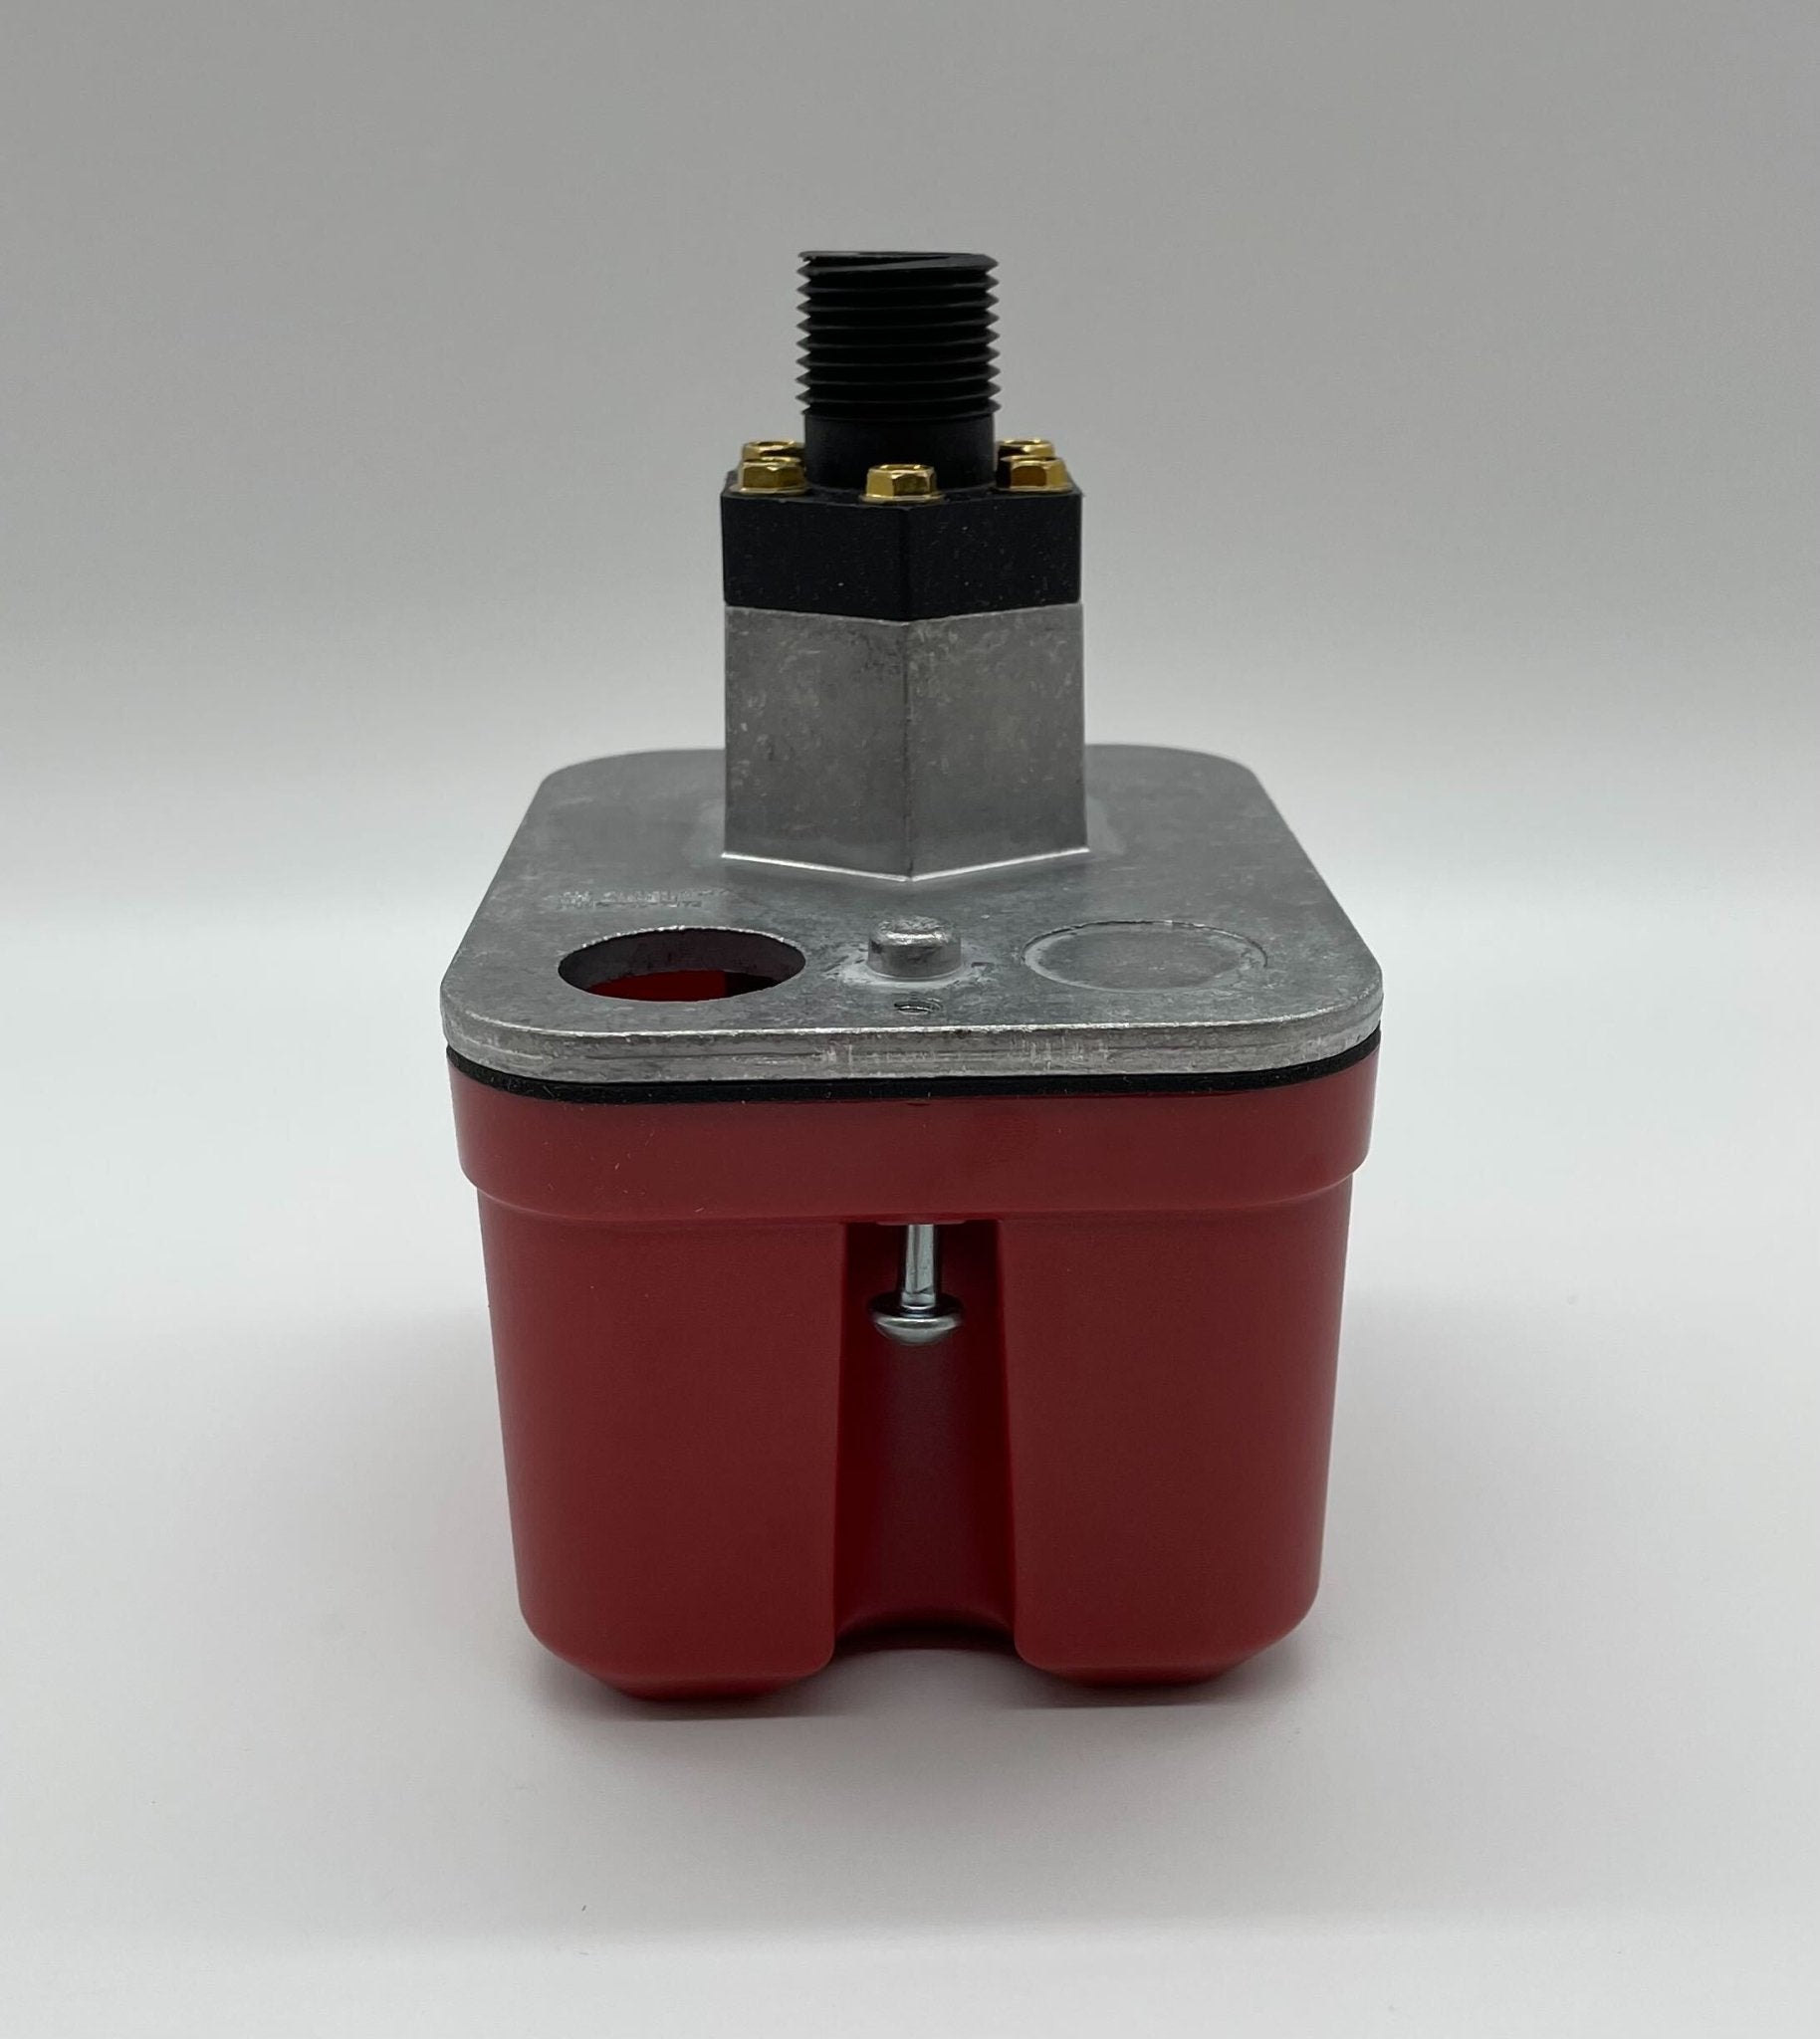 System Sensor EPS40-2 Alarm Pressure Switch 40PSI - The Fire Alarm Supplier